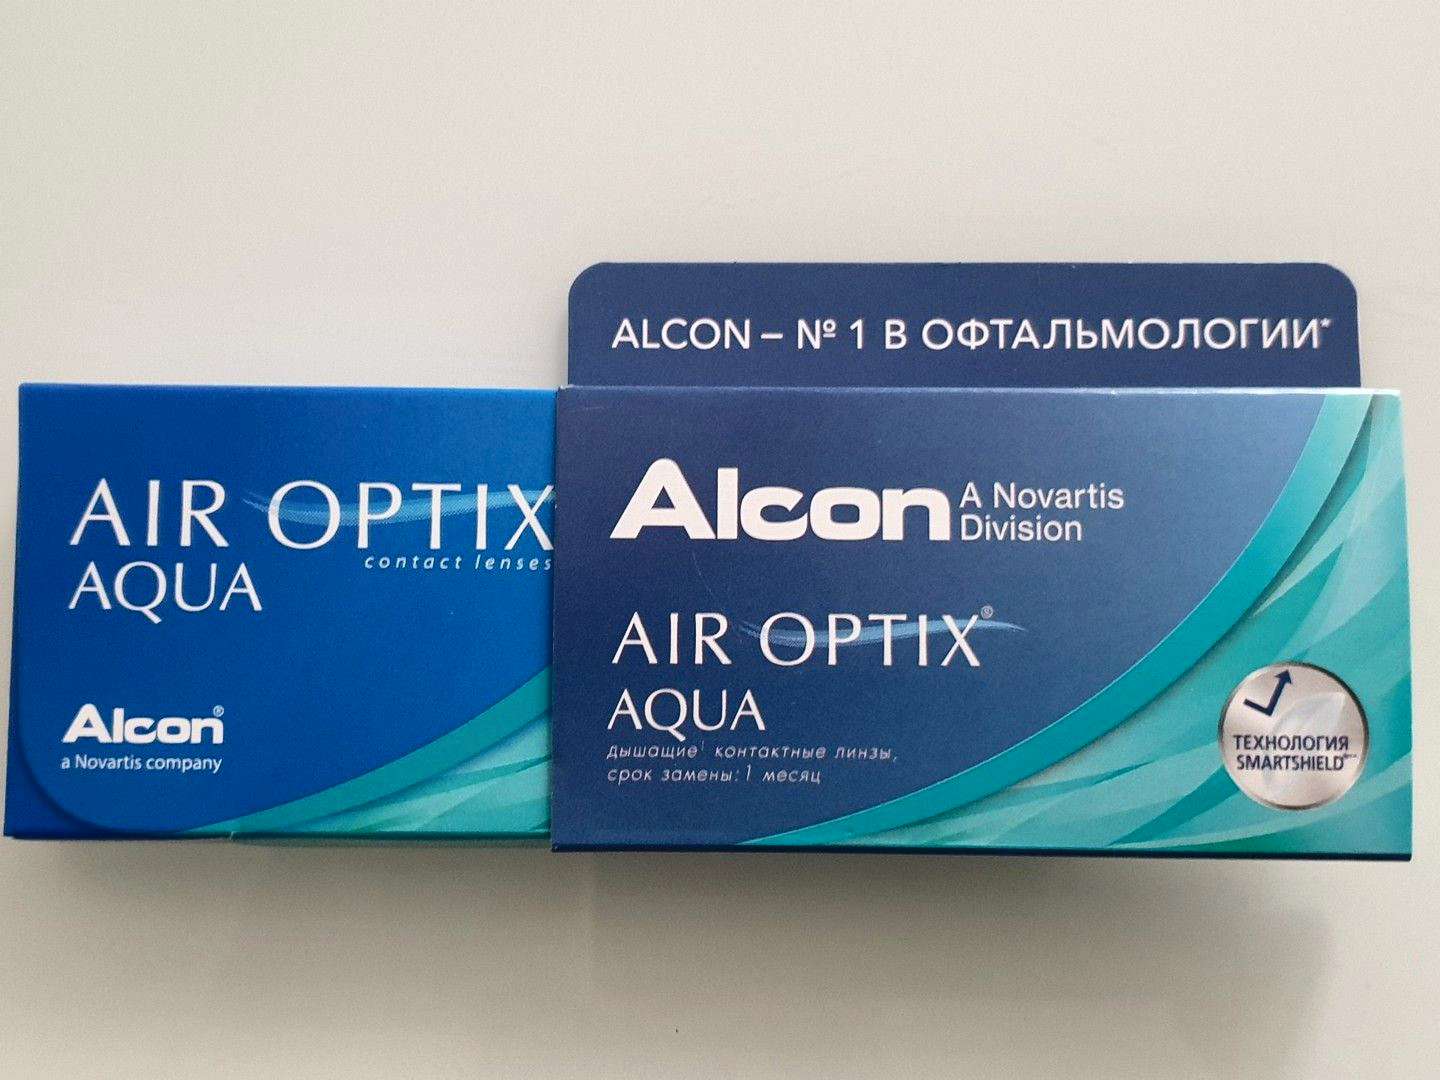 Alcon. Alcon контактные линзы Air Optix Aqua. Контактные линзы Alcon Air Optix Aqua 6. Линзы Alcon Air Optix 8. 5. Линзы Air Optix Aqua 14.2.